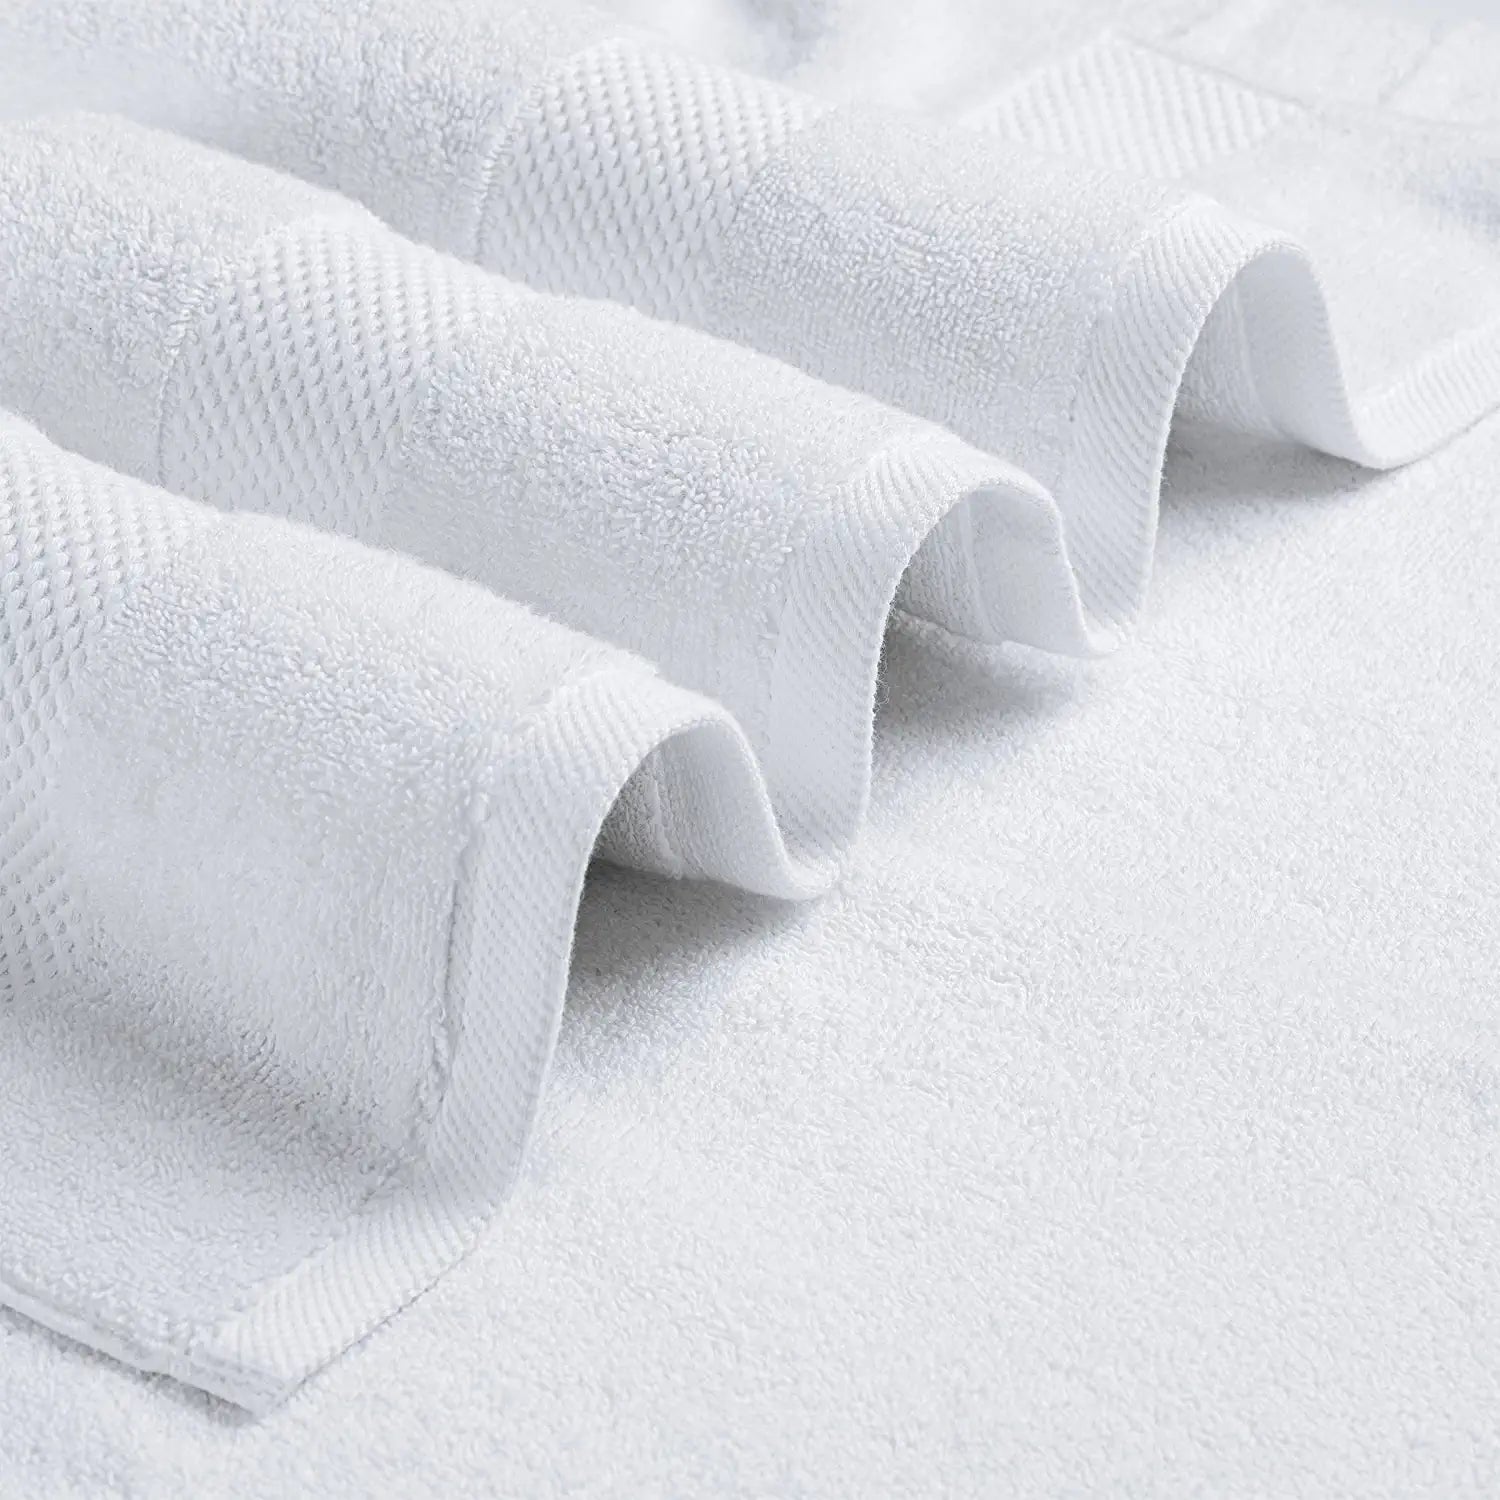  White Classic Luxury Hand Towels